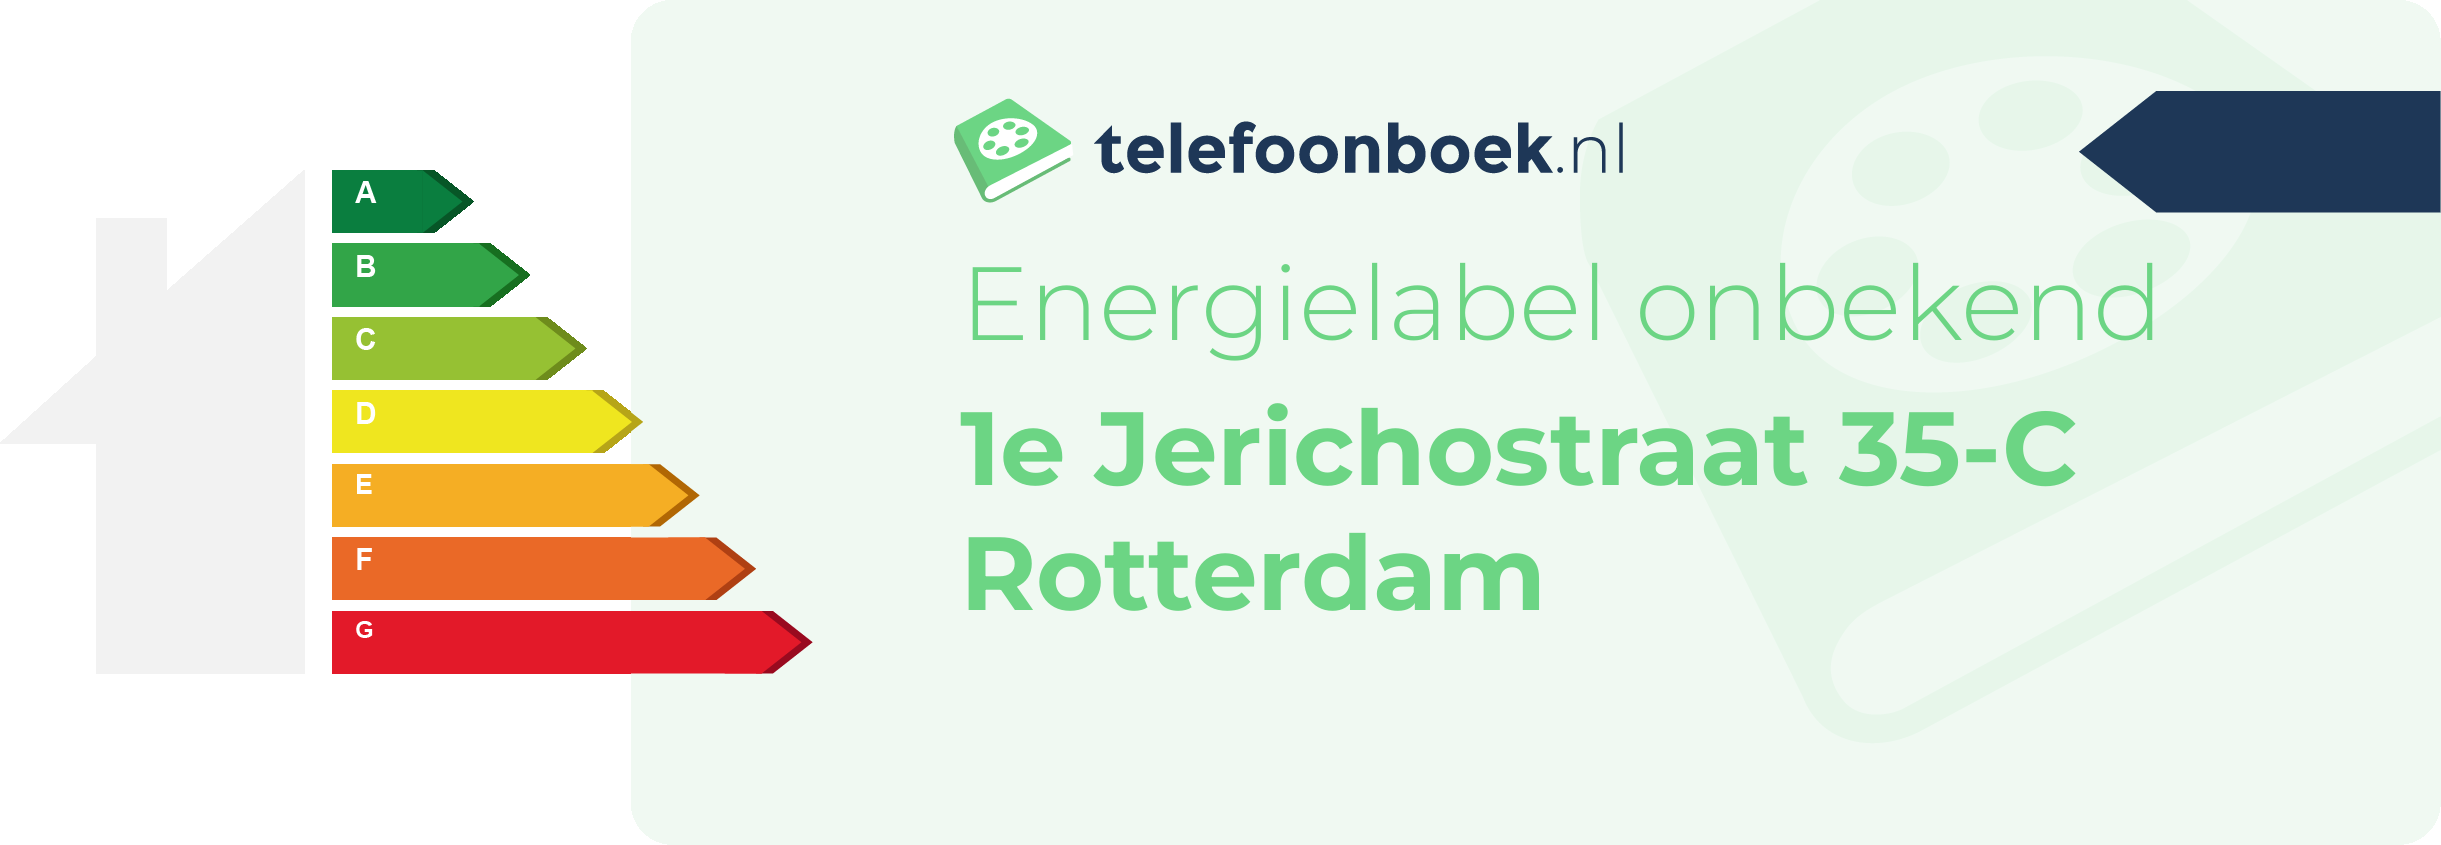 Energielabel 1e Jerichostraat 35-C Rotterdam